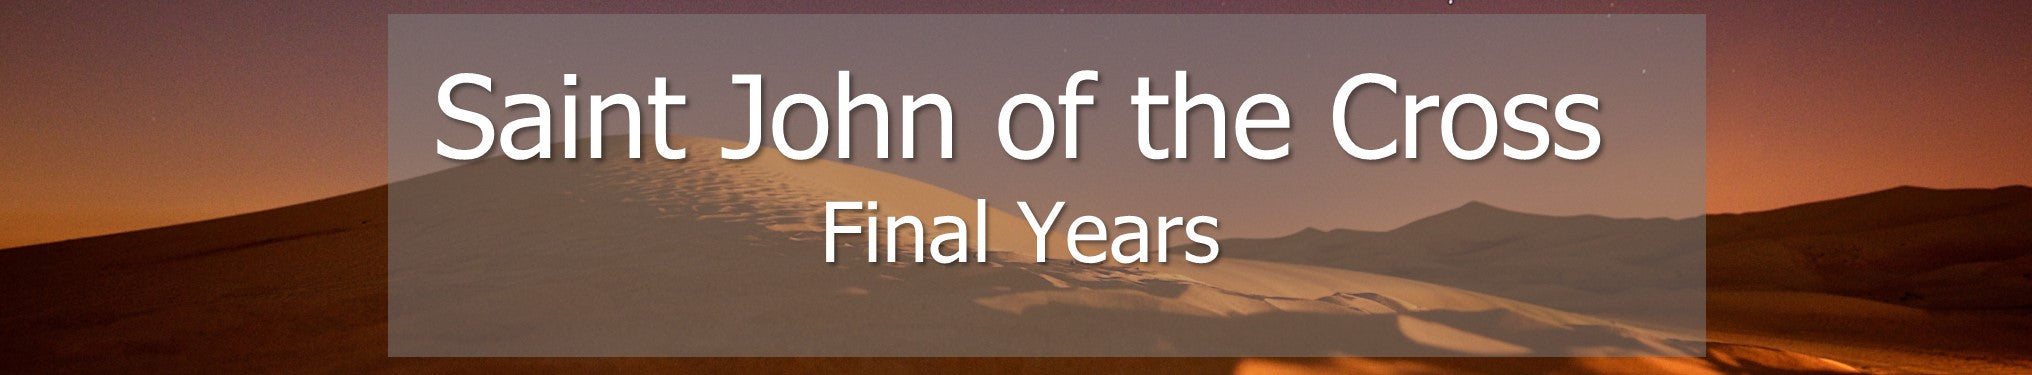 Saint John of the Cross - Final Years